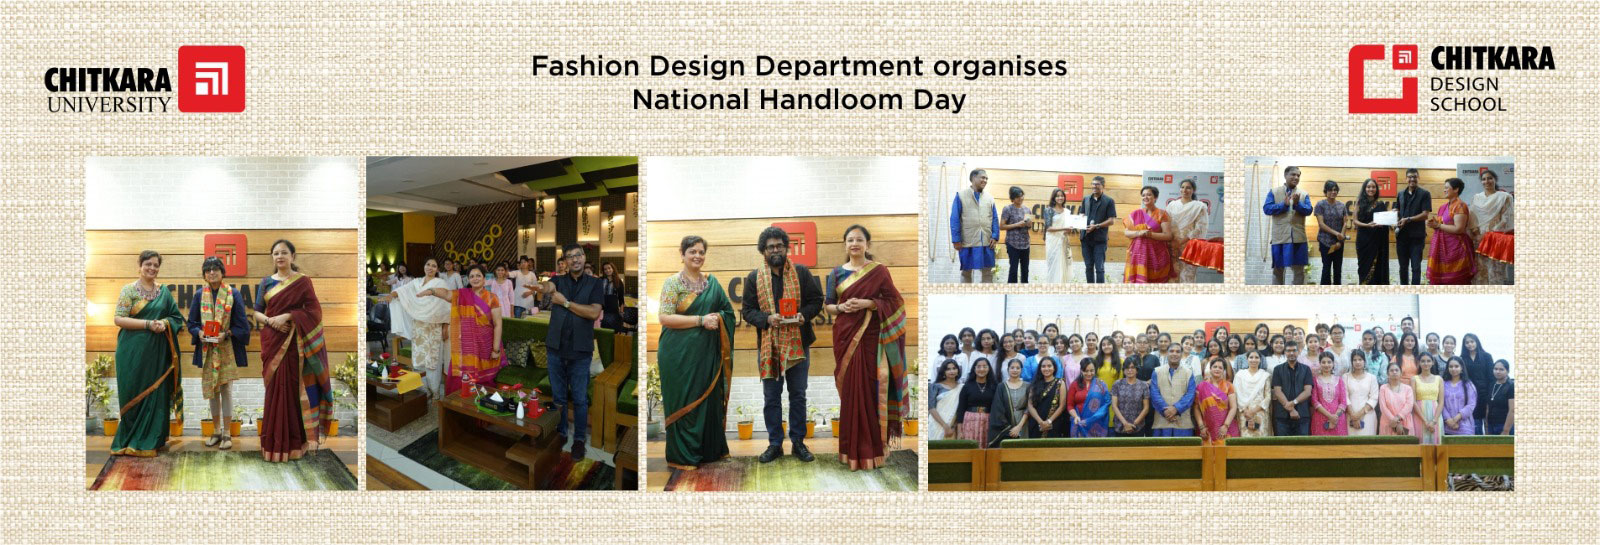 National Handloom Day - Chitkara University